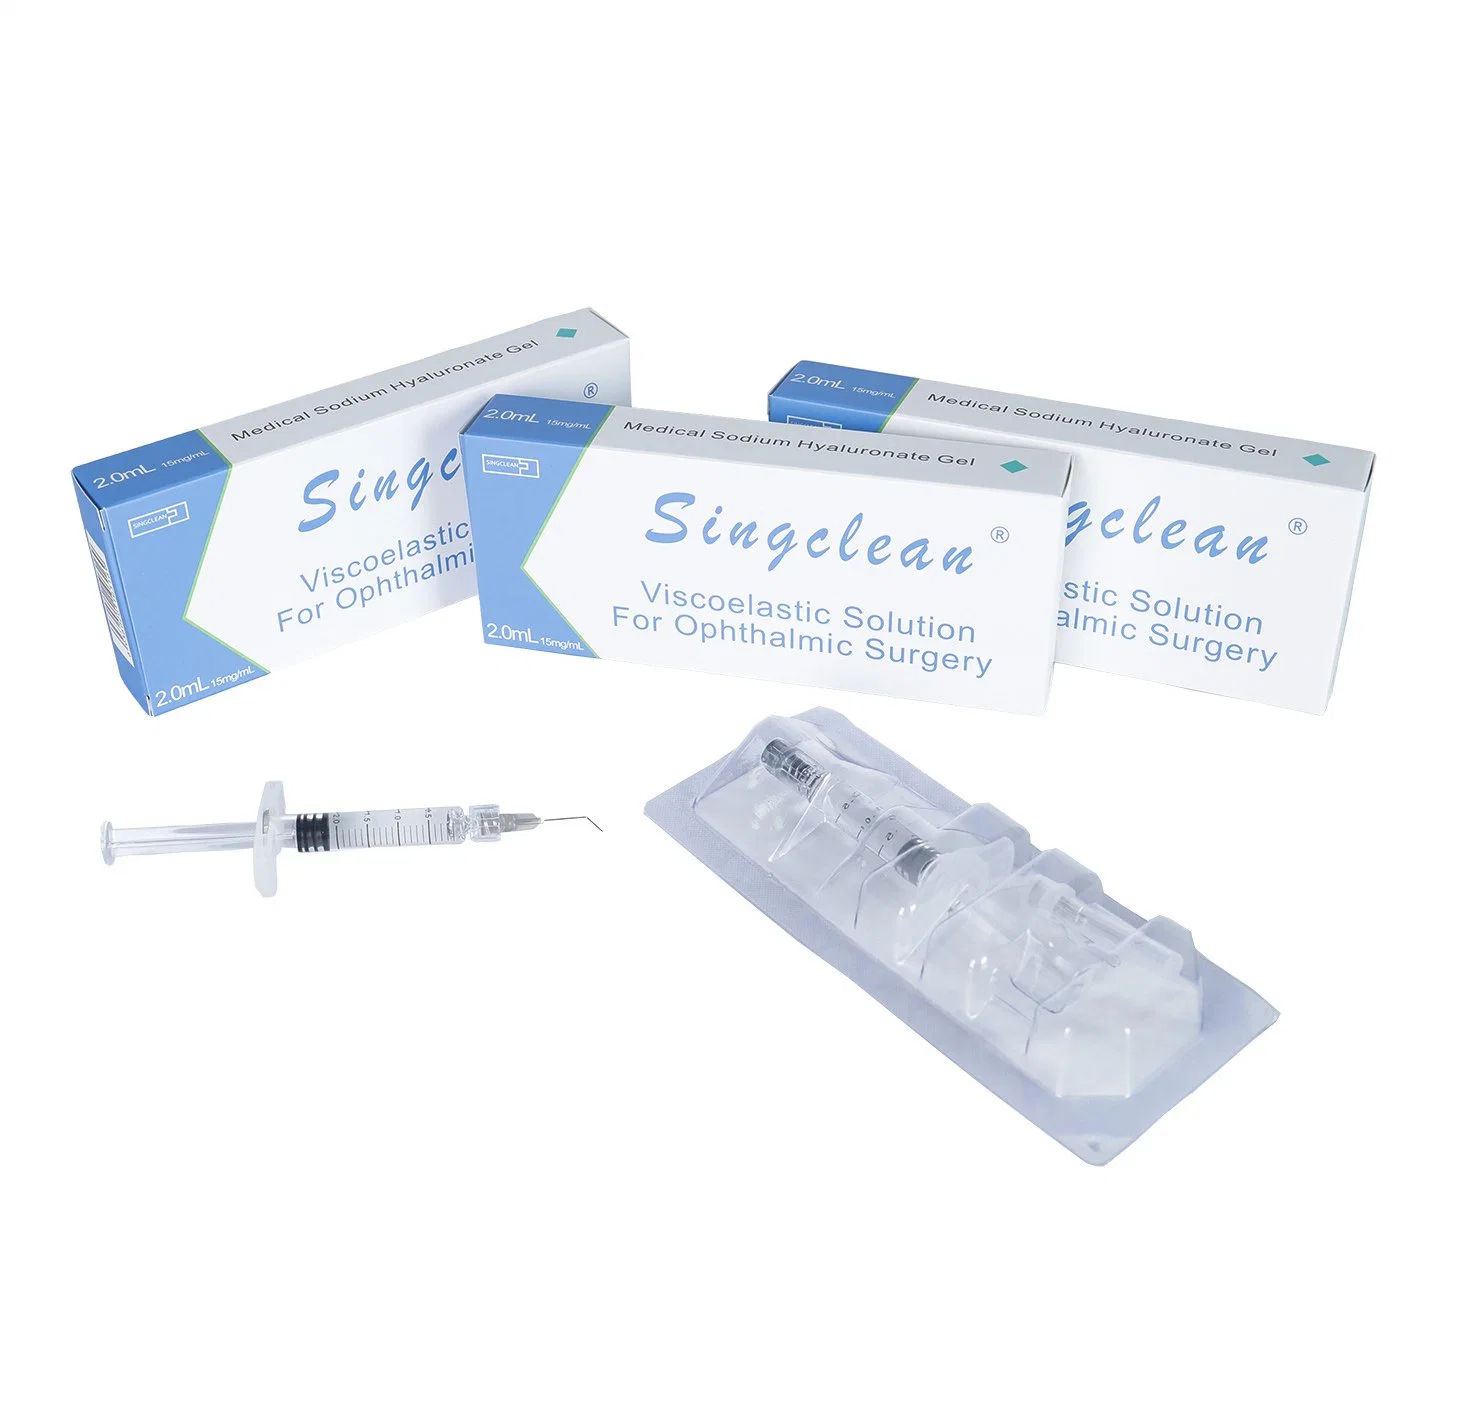 Singclean Medical Sodium Hyaluronate Gel Ophthalmic Viscoelastic Eye Protection